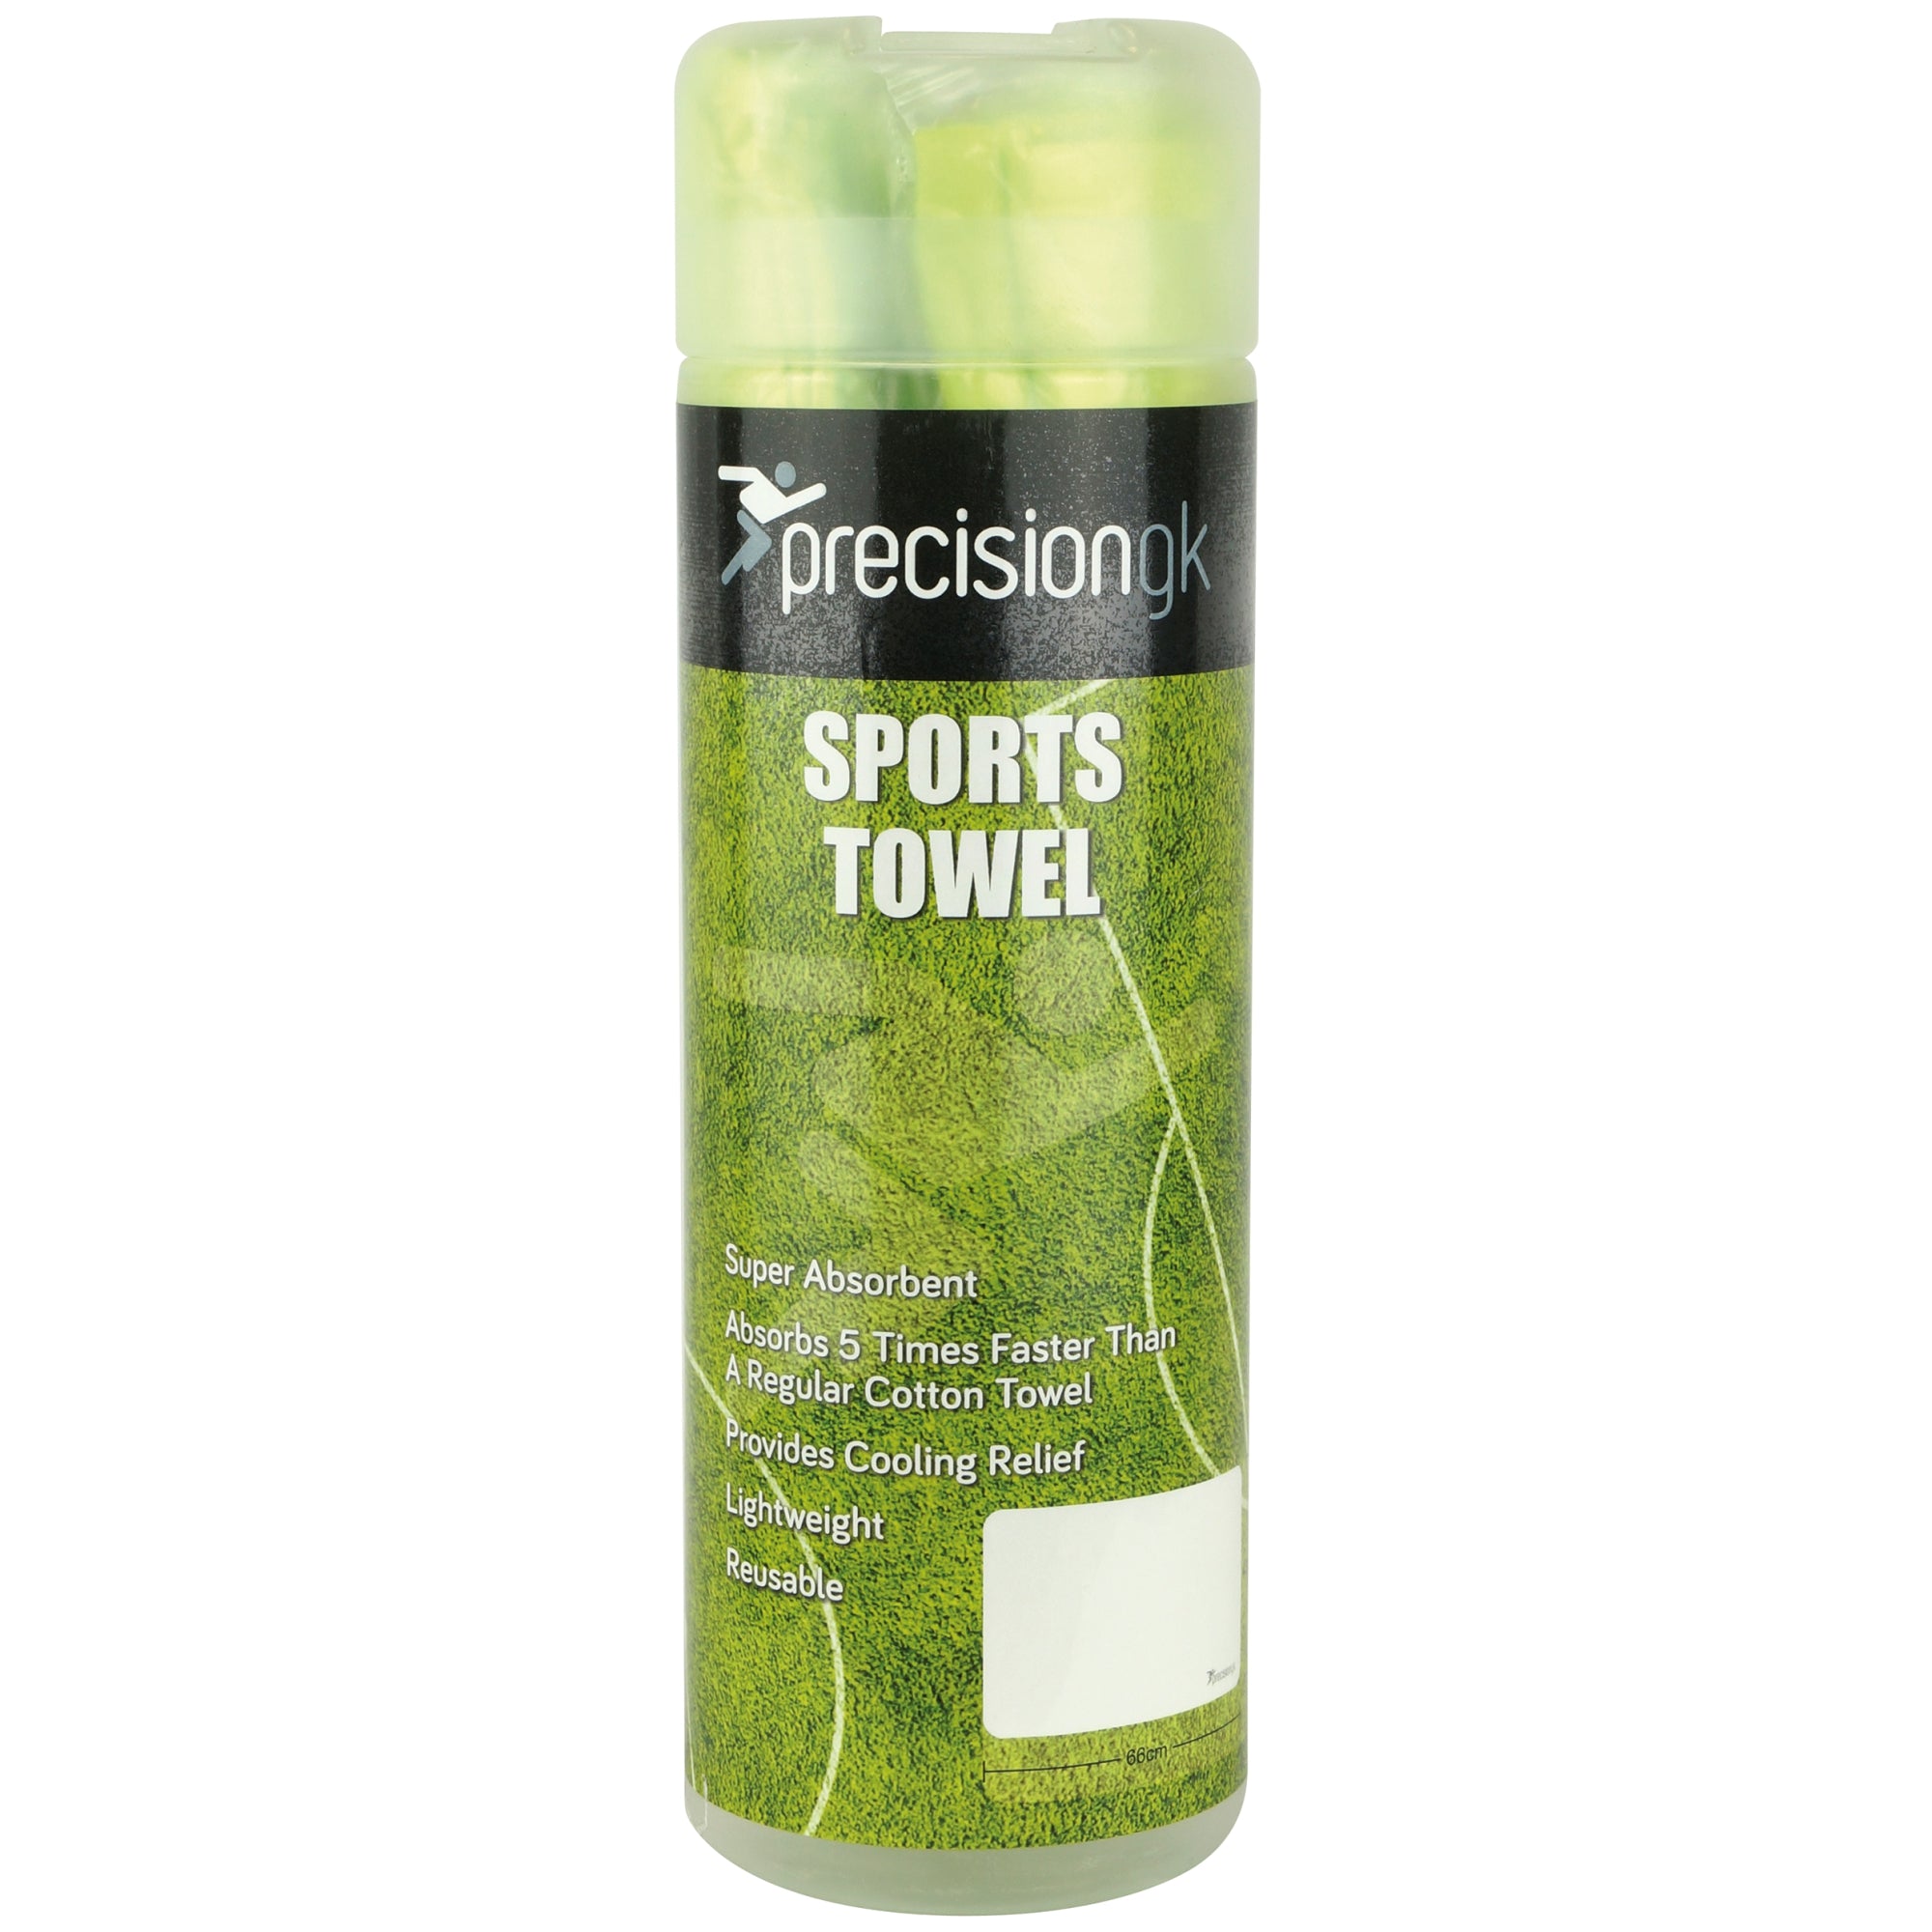 Precision GK Sports Towel - Green